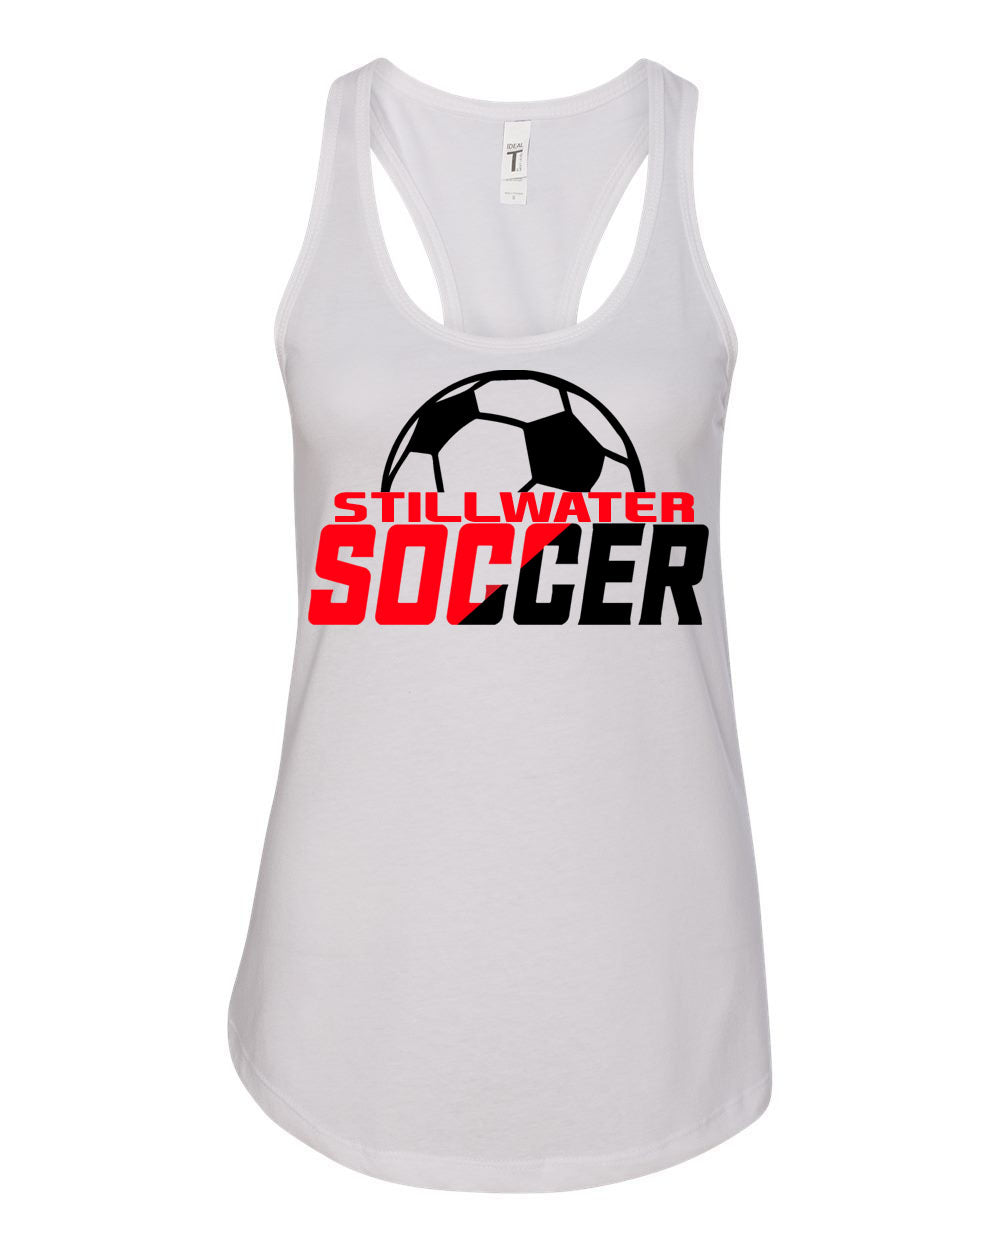 Stillwater Soccer Design 1 Tank Top